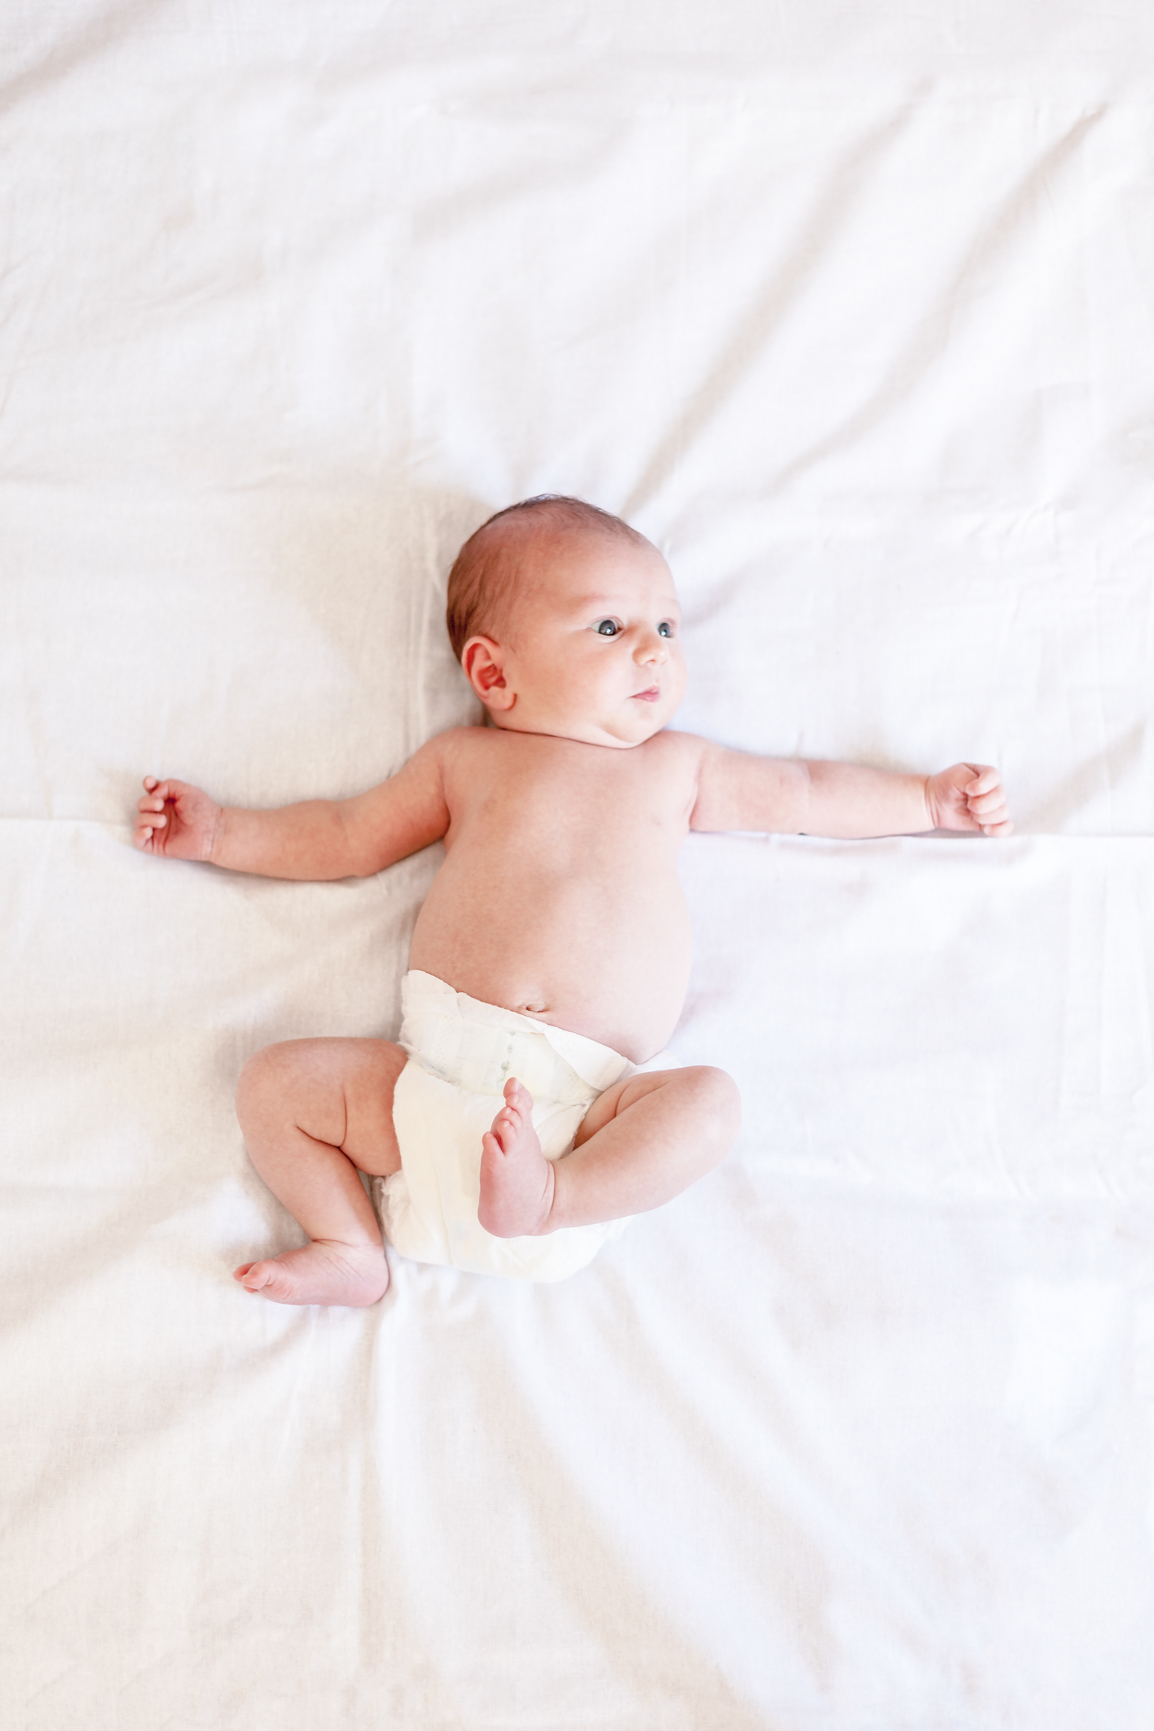 Séance naissance | Justine Maquart Photographe